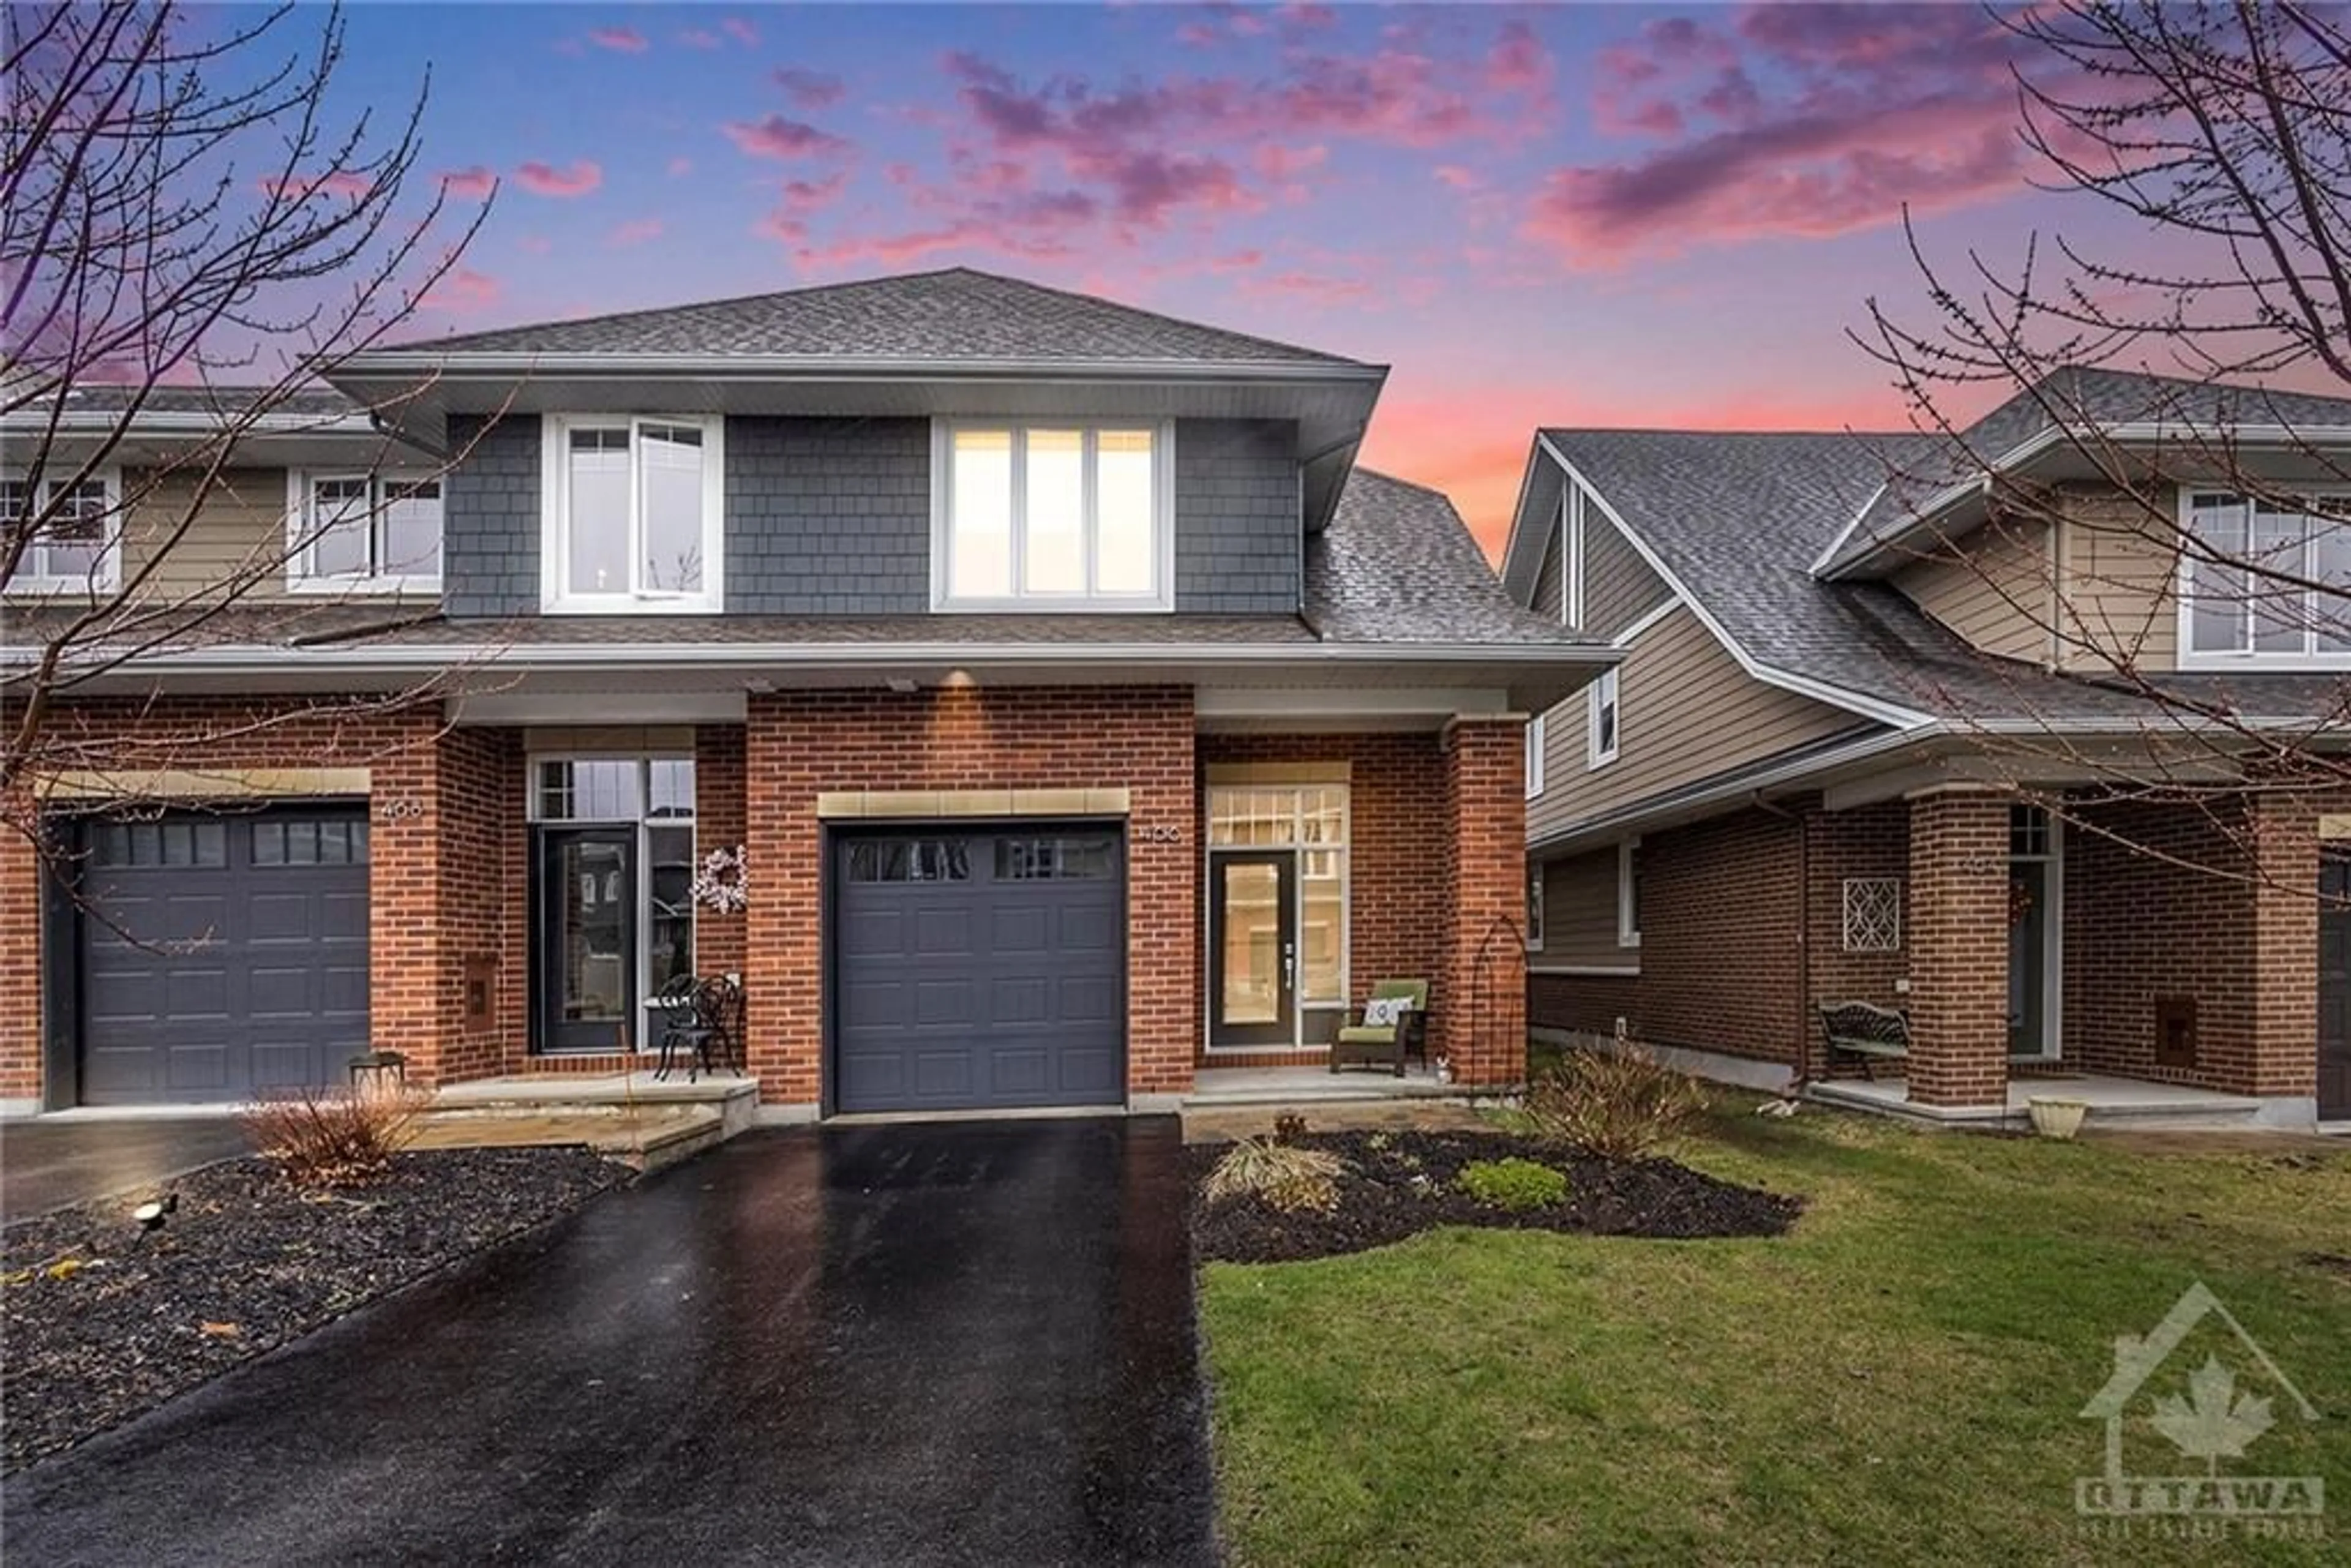 Home with brick exterior material for 466 KILSPINDIE Ridge, Ottawa Ontario K2J 5M8